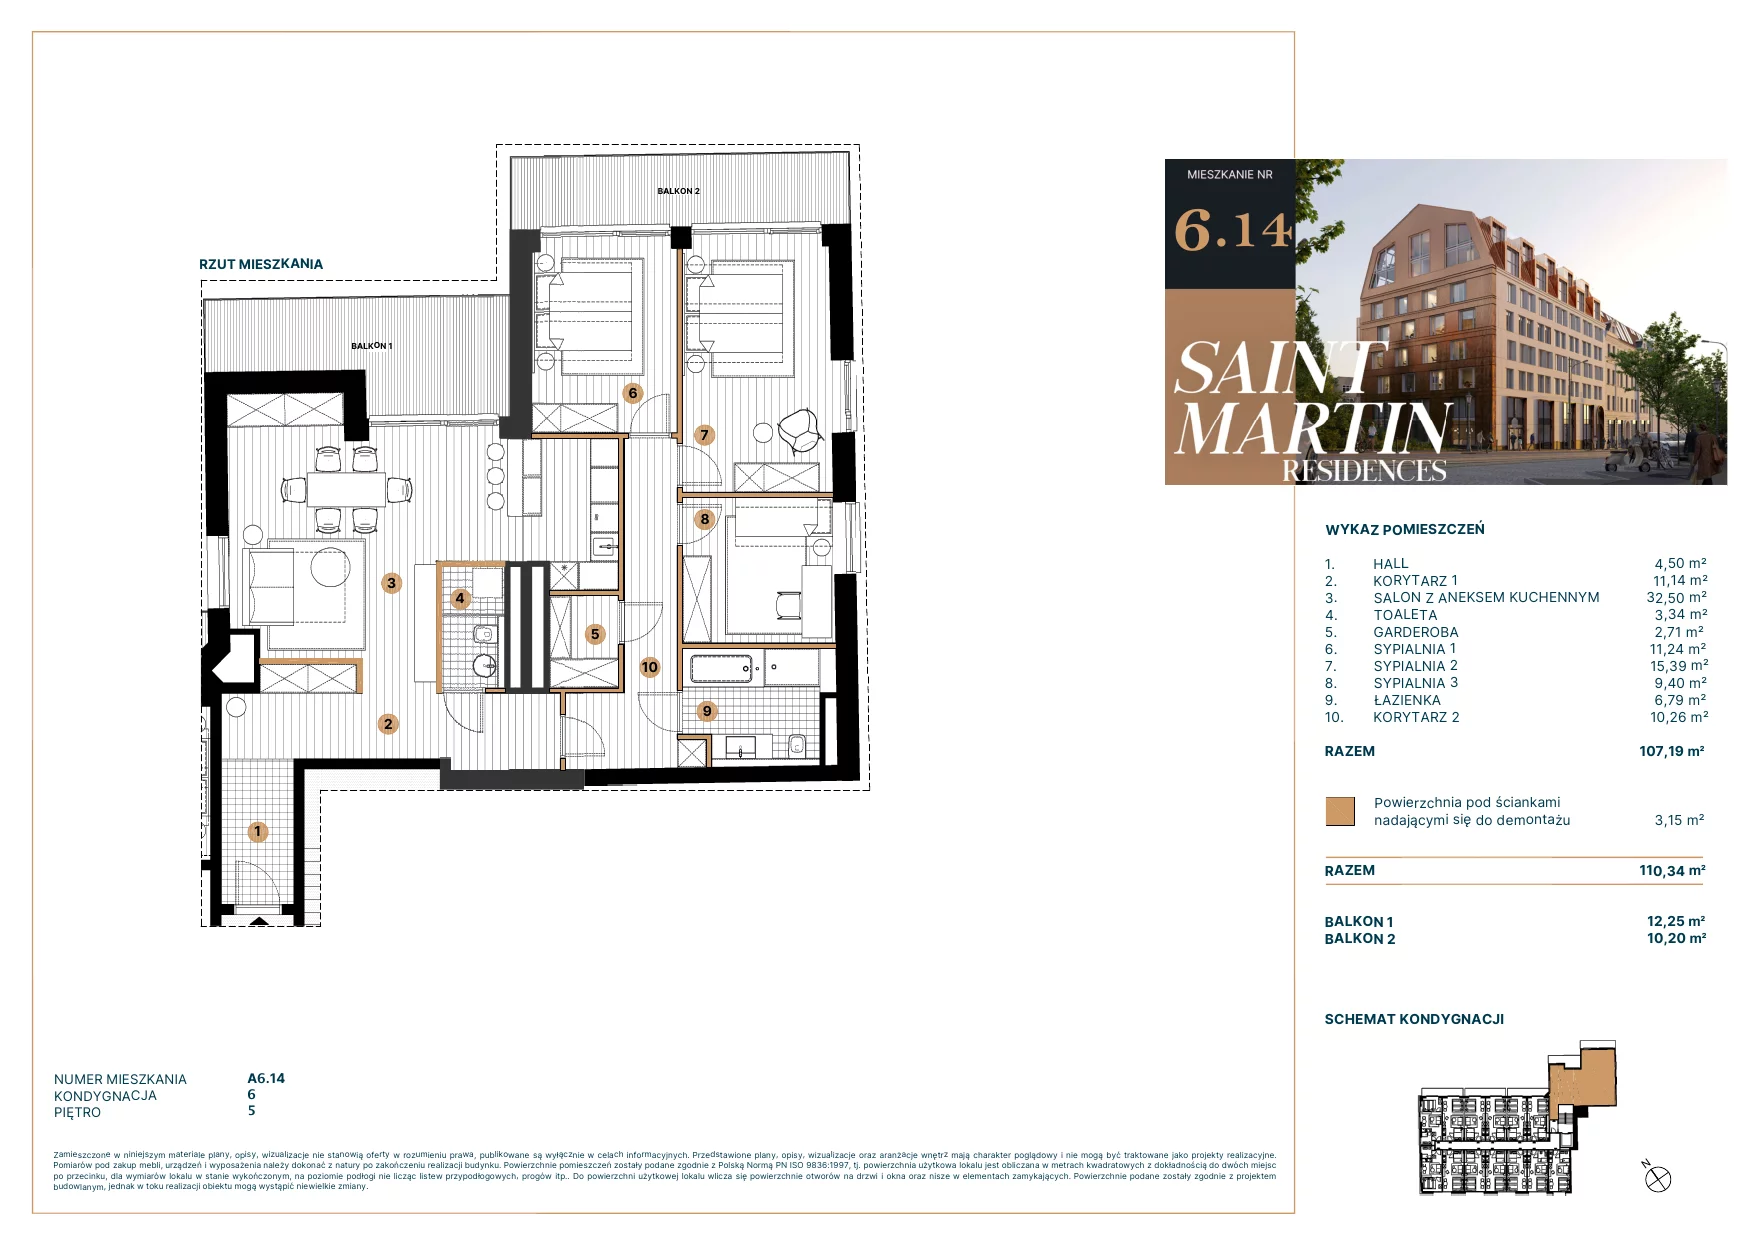 Apartament 108,12 m², piętro 5, oferta nr A6.14, Saint Martin Residences II, Poznań, Stare Miasto, Stare Miasto, ul. Podgórna 7